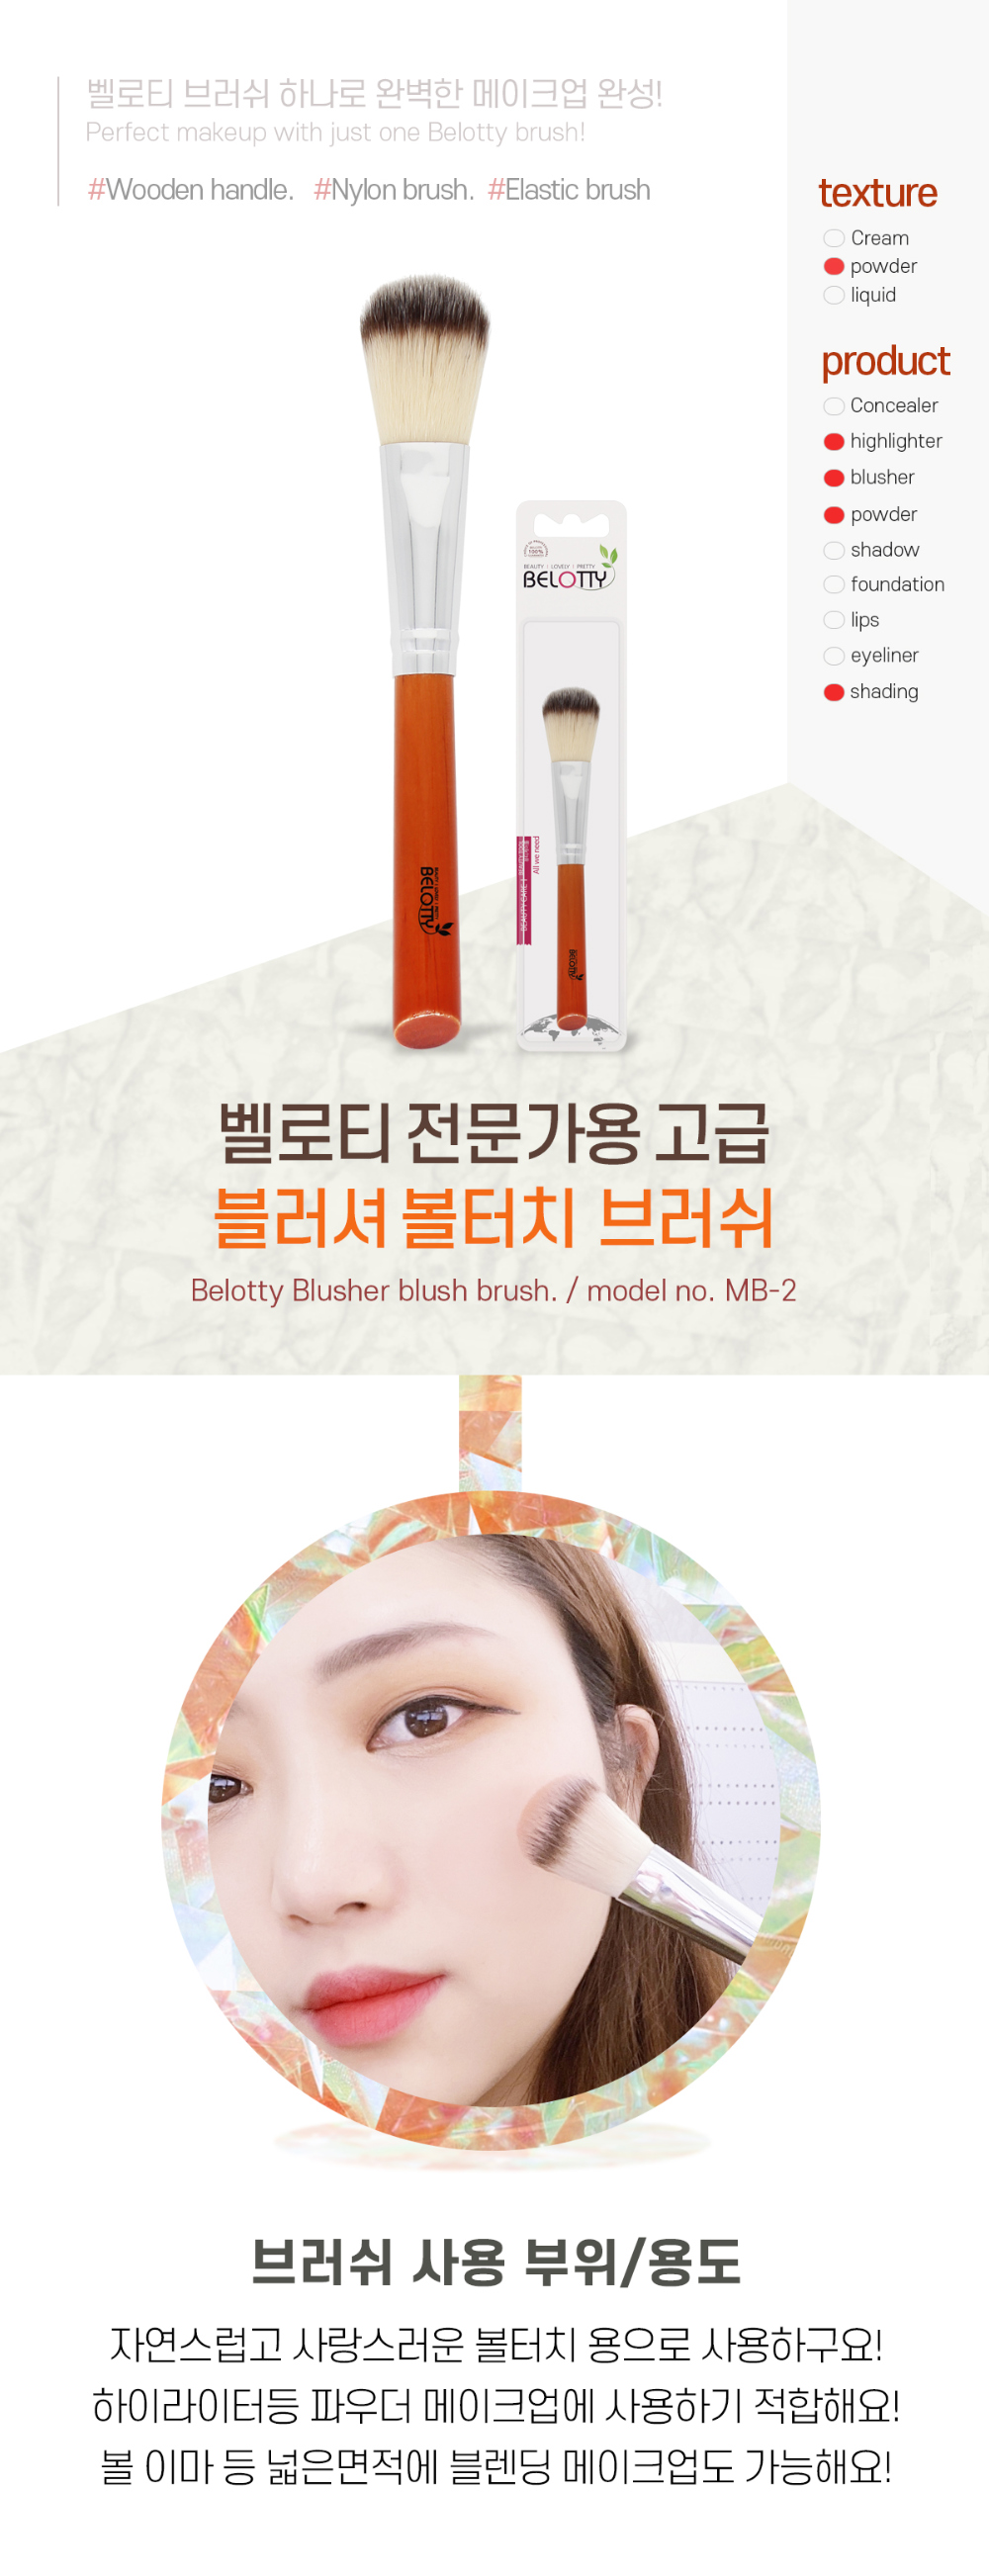 cosmetics product image-S23L1